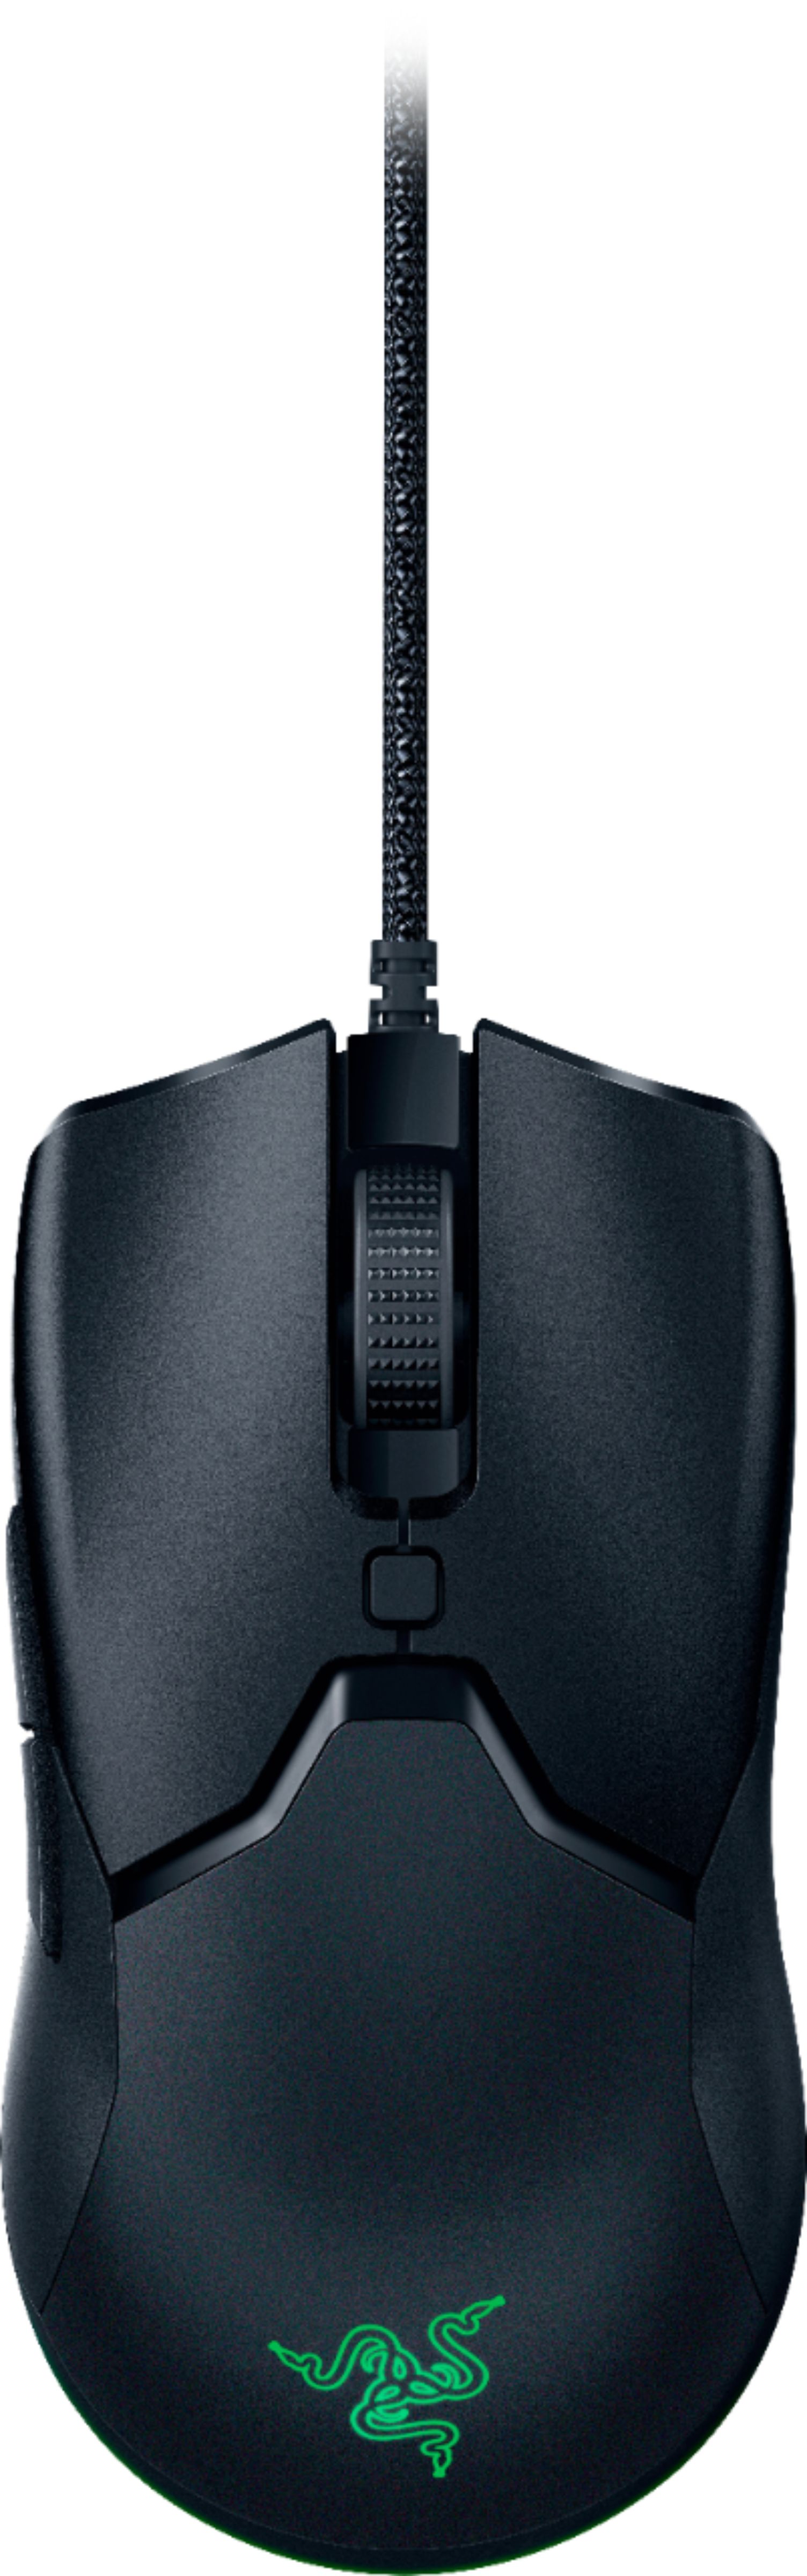 Razer's Viper Mini Signature Edition is a batsh*t crazy $279 mouse